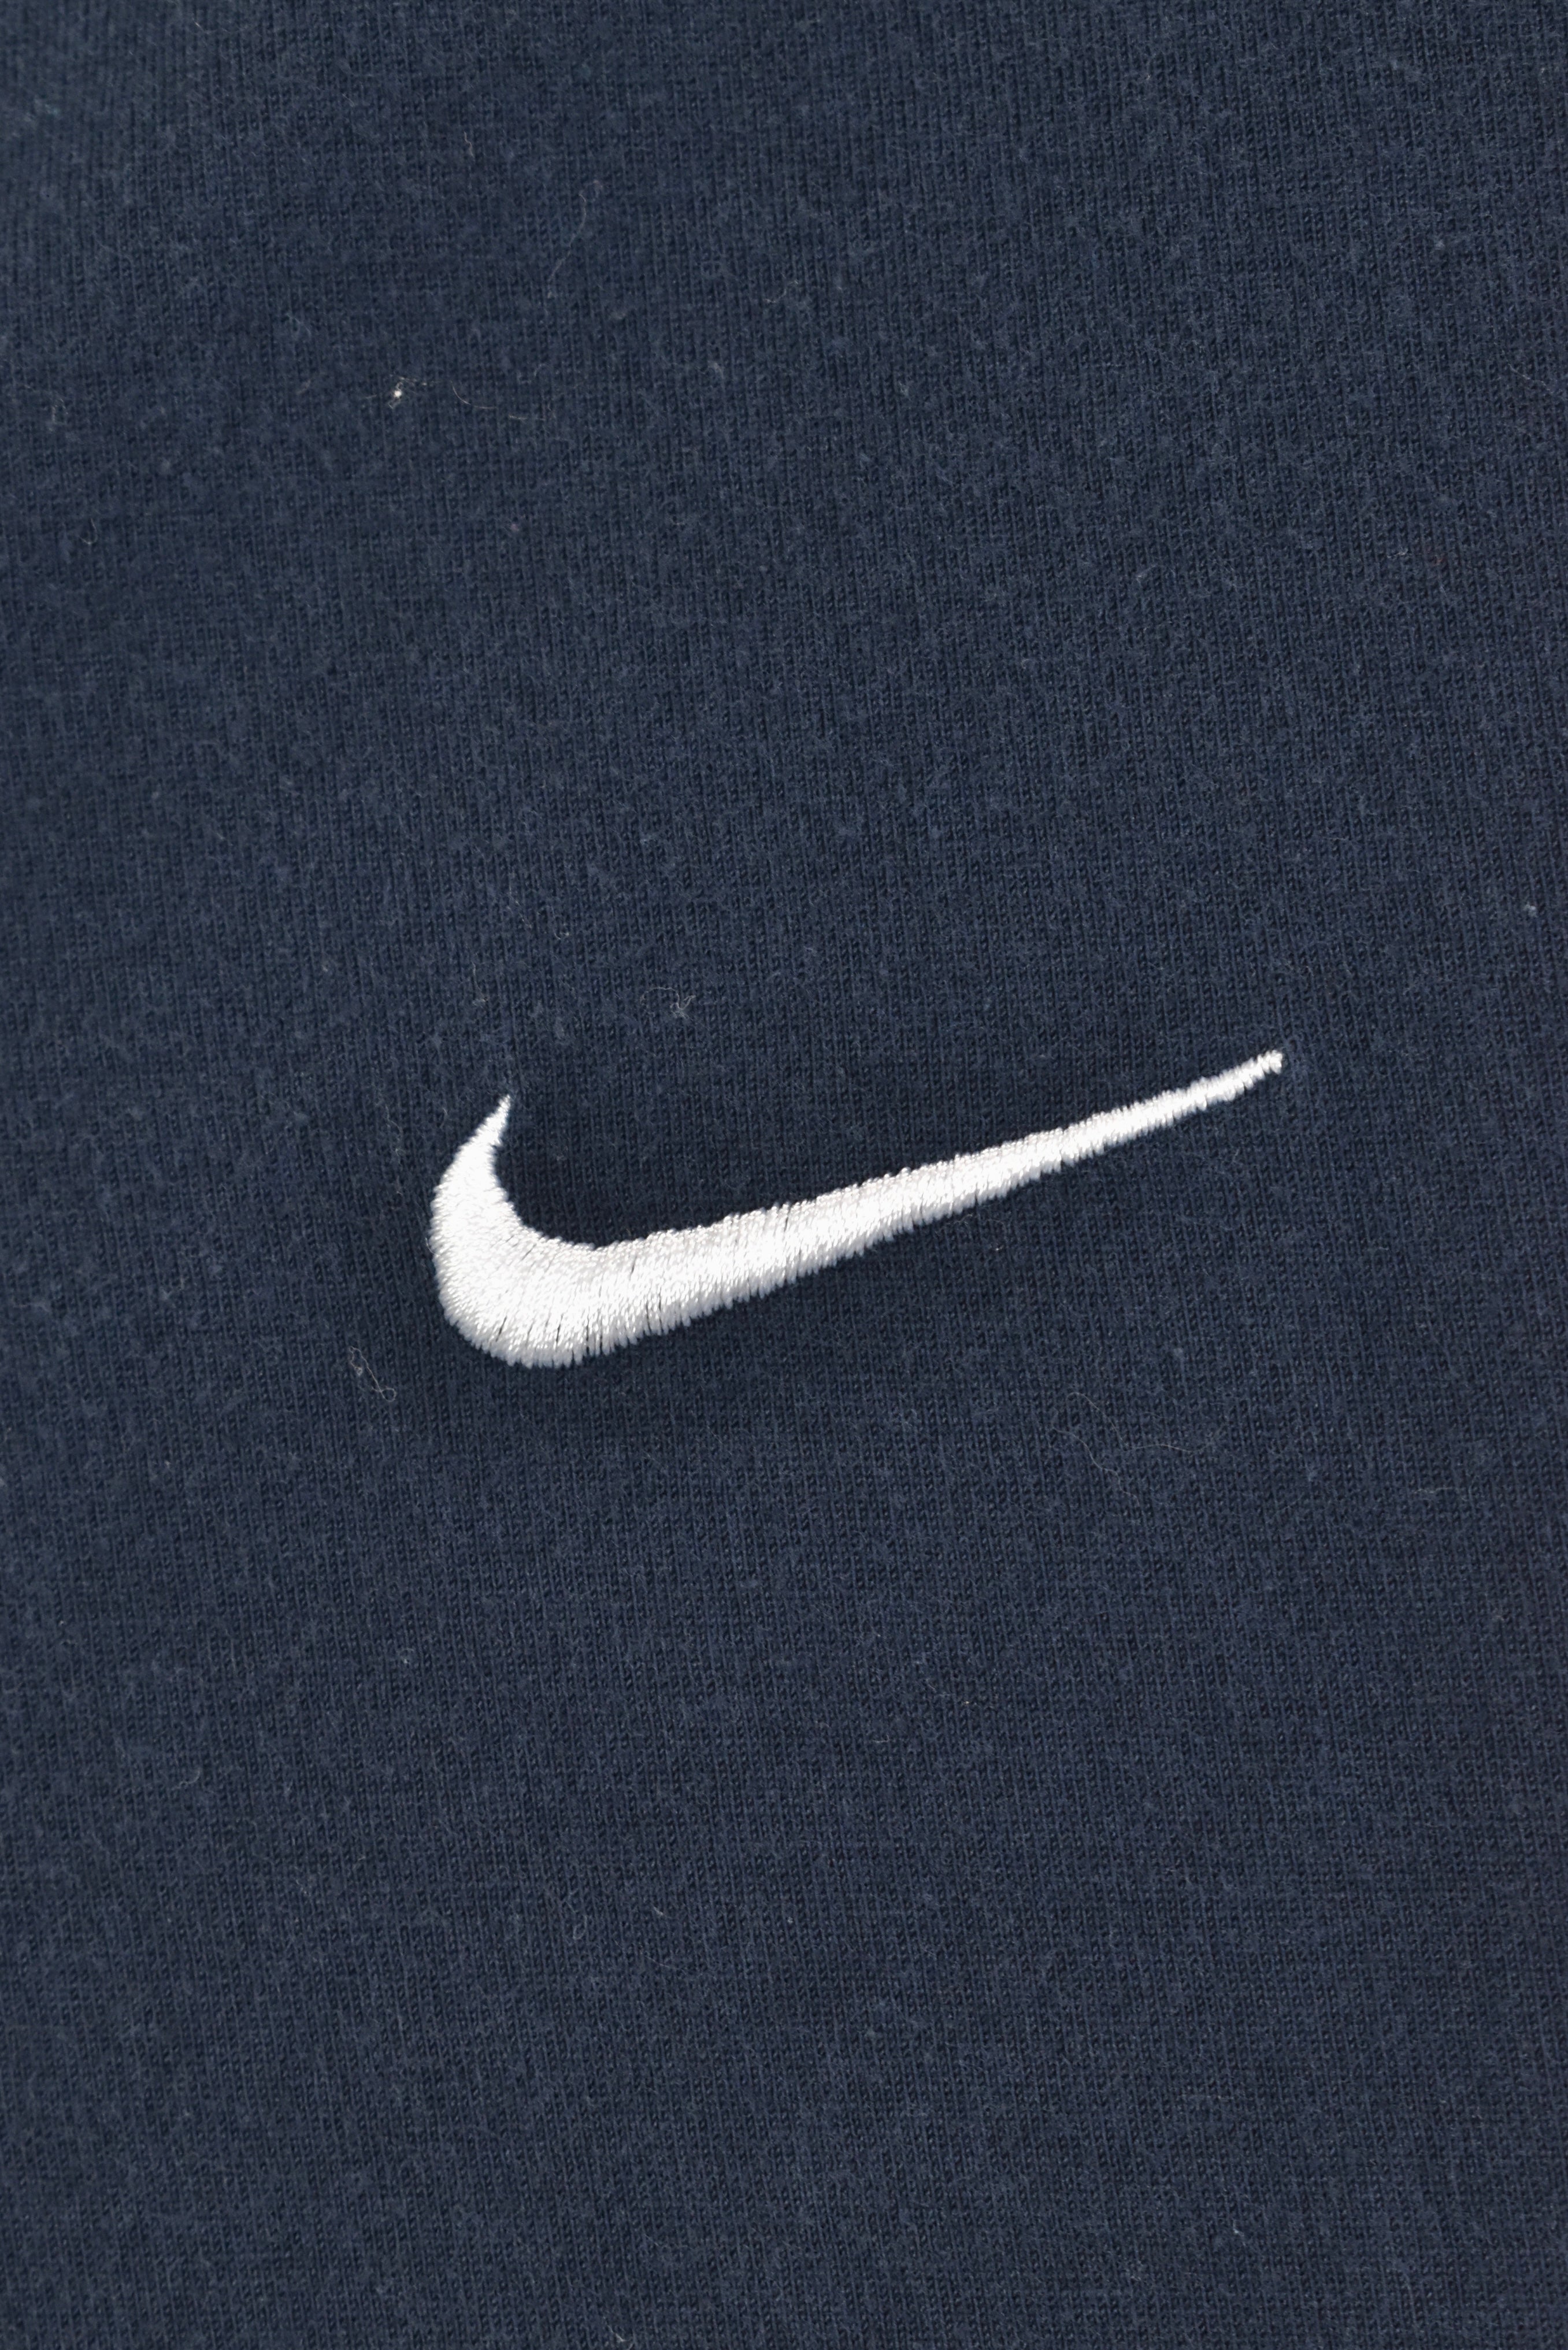 Modern Nike embroidered navy t-shirt | Large NIKE